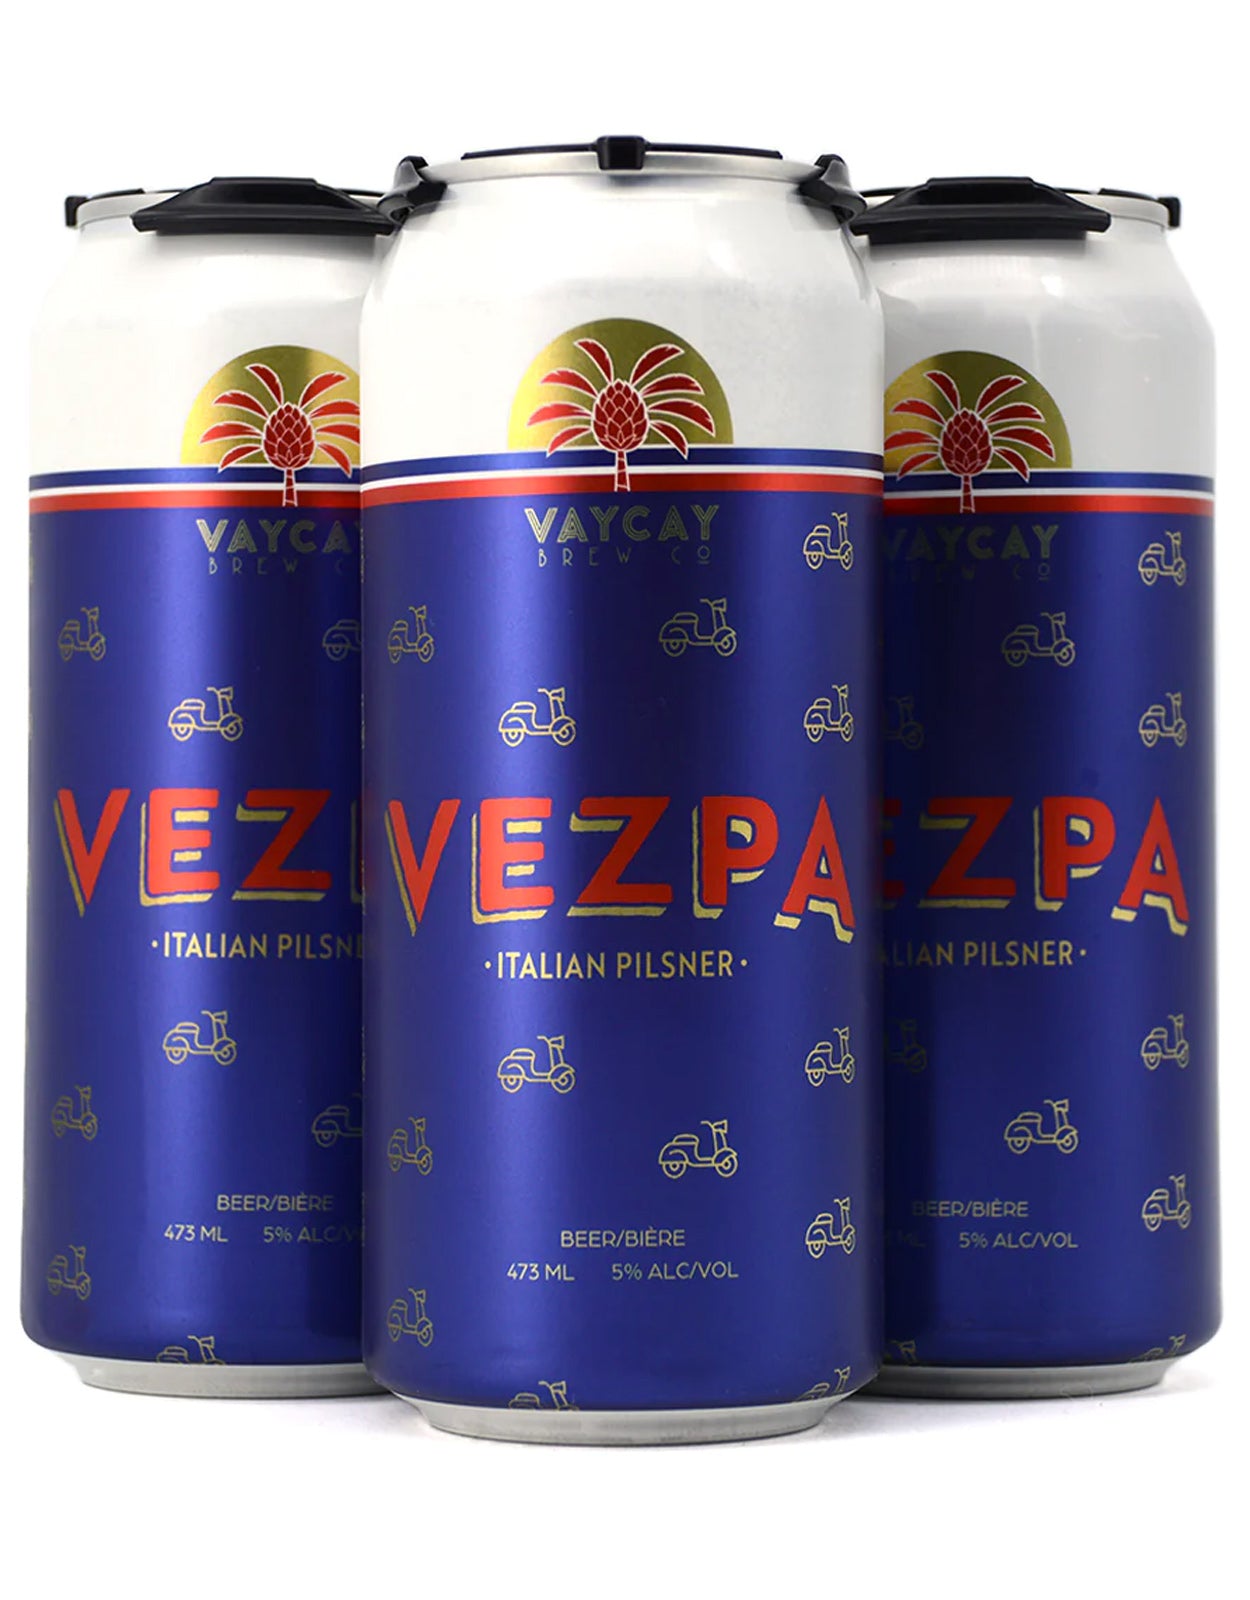 Vaycay Brew Vezpa Italian Pilsner 473 ml - 4 Cans